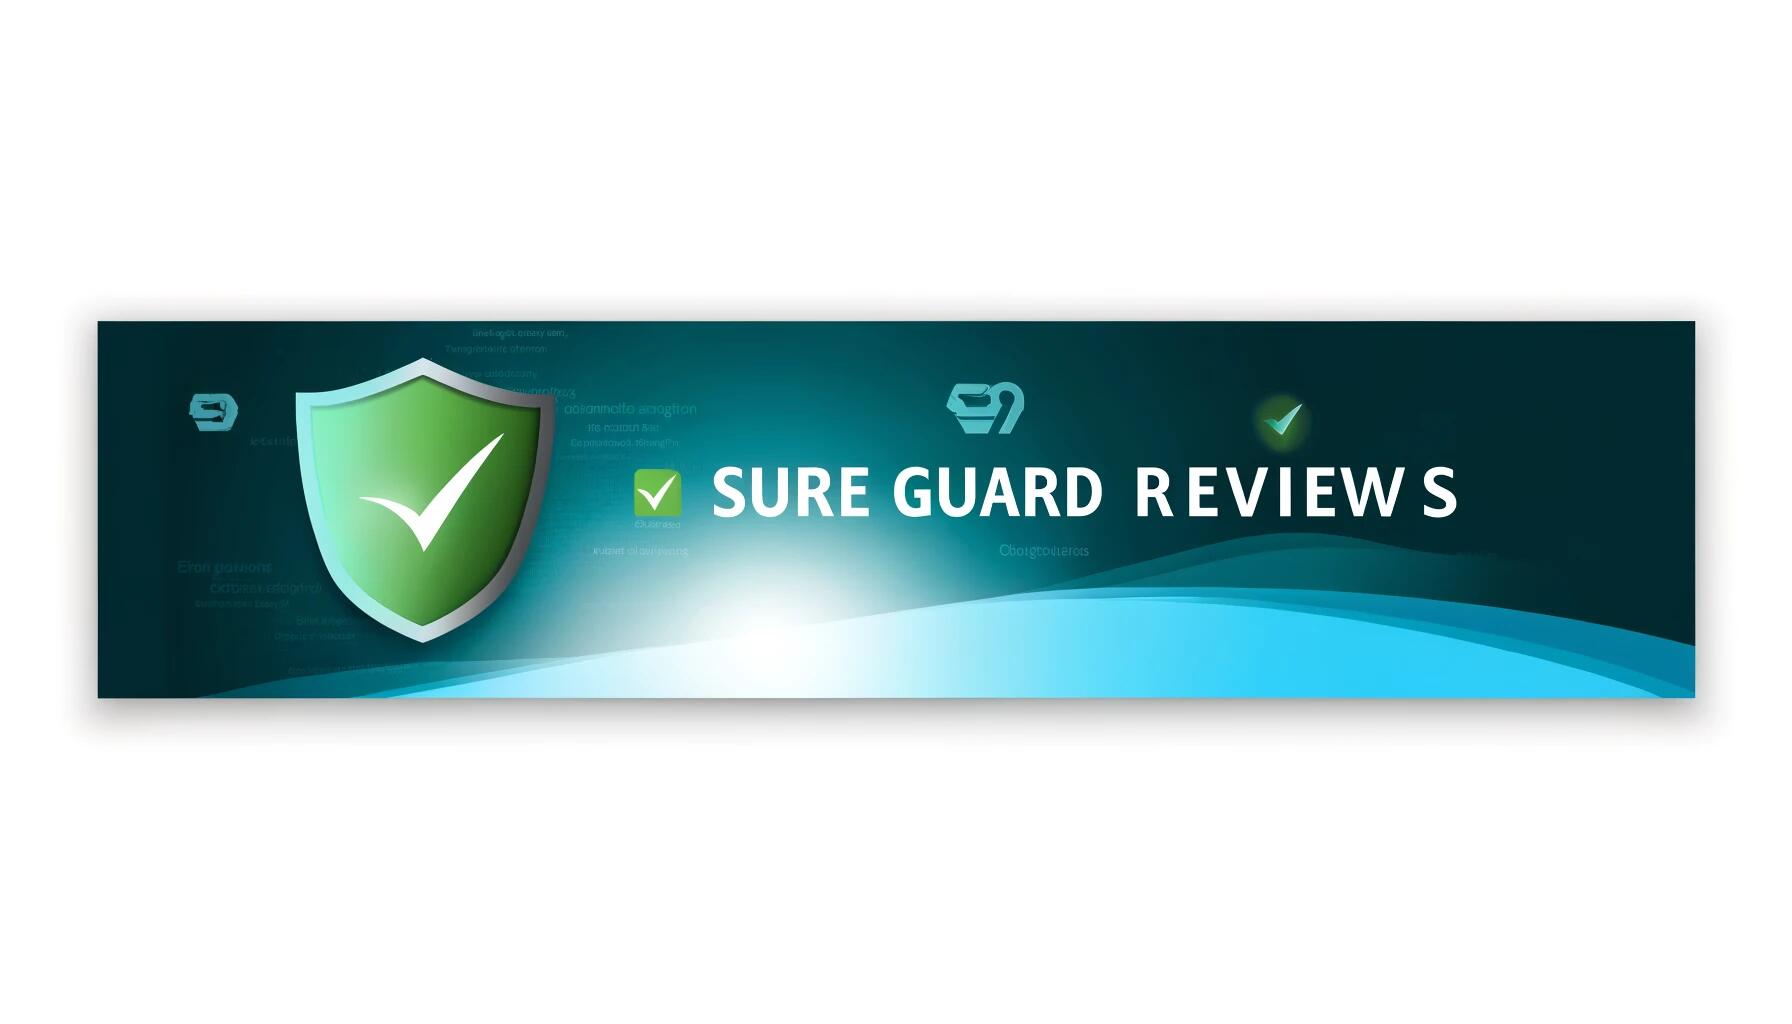 Sure Guard Reviews